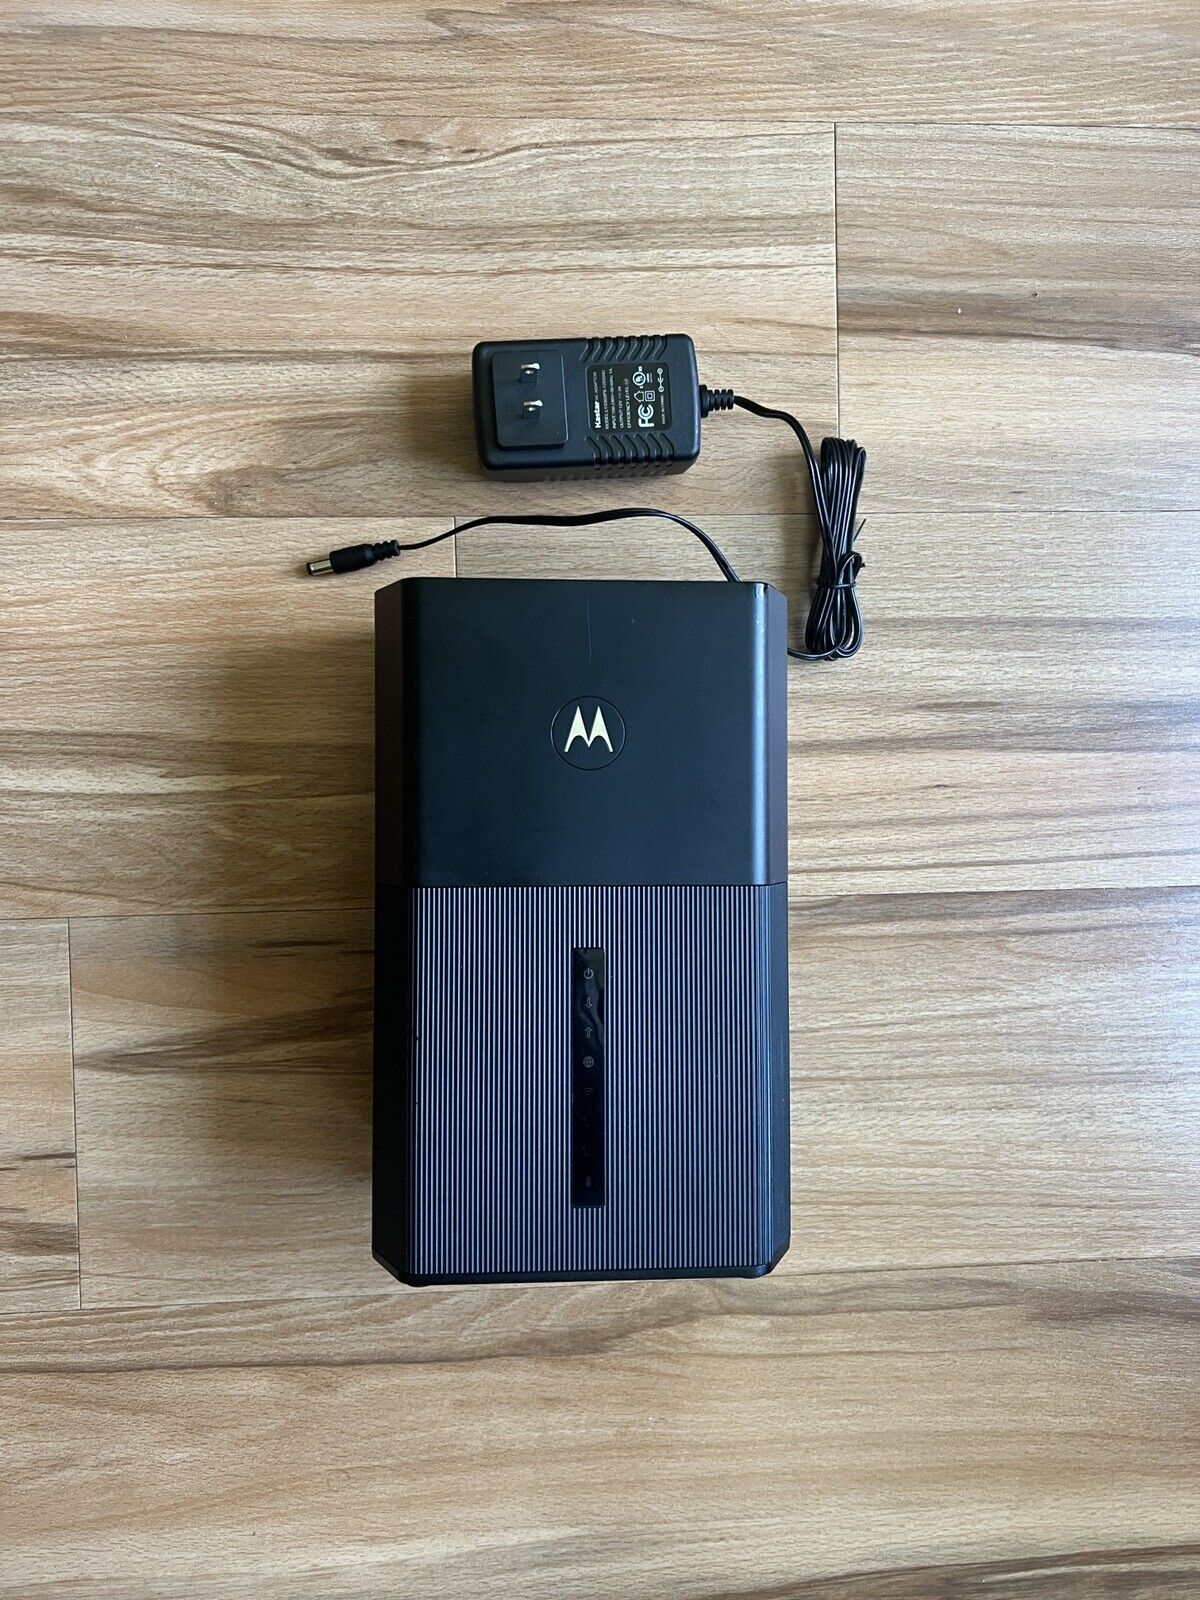 Motorola MT8733 Voice Enabled Docsis 3.1  Modem + AX6000 Wireless WiFi Router